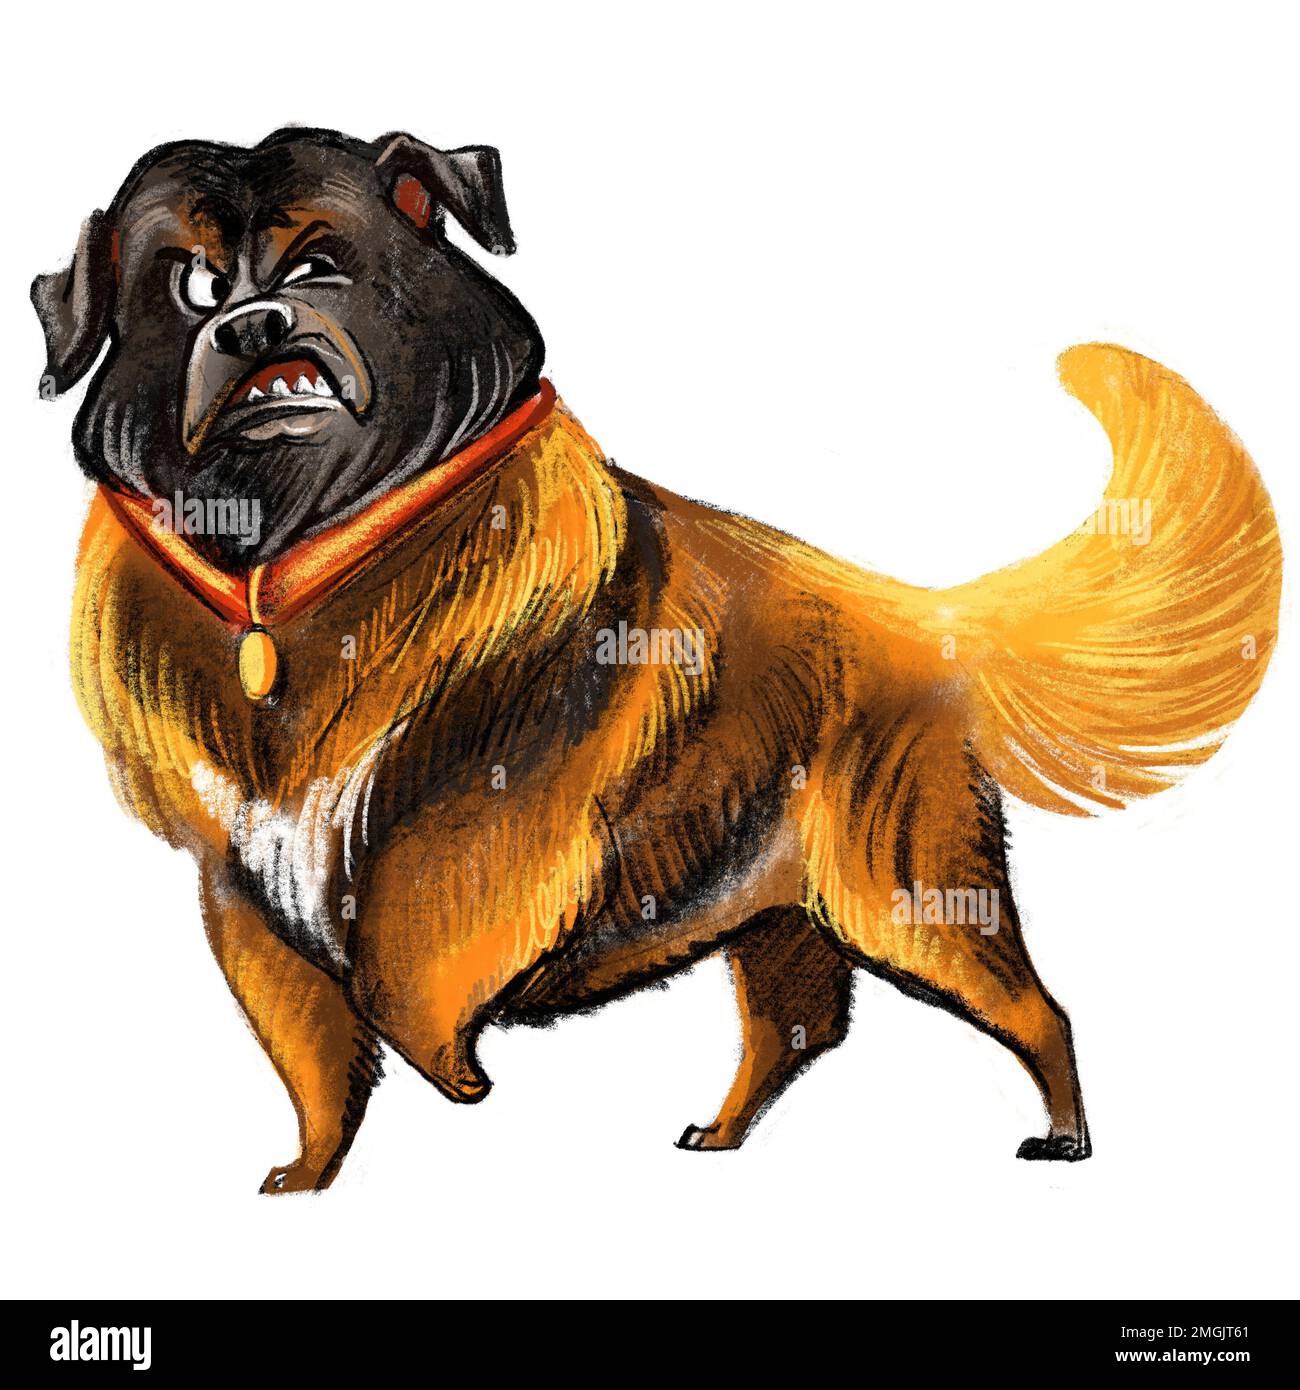 Cute funny cartoon dog character. Estrela mountain dog breed raster illustration isolatwd on white background. For print, design, sublimation, sticker Stock Photo